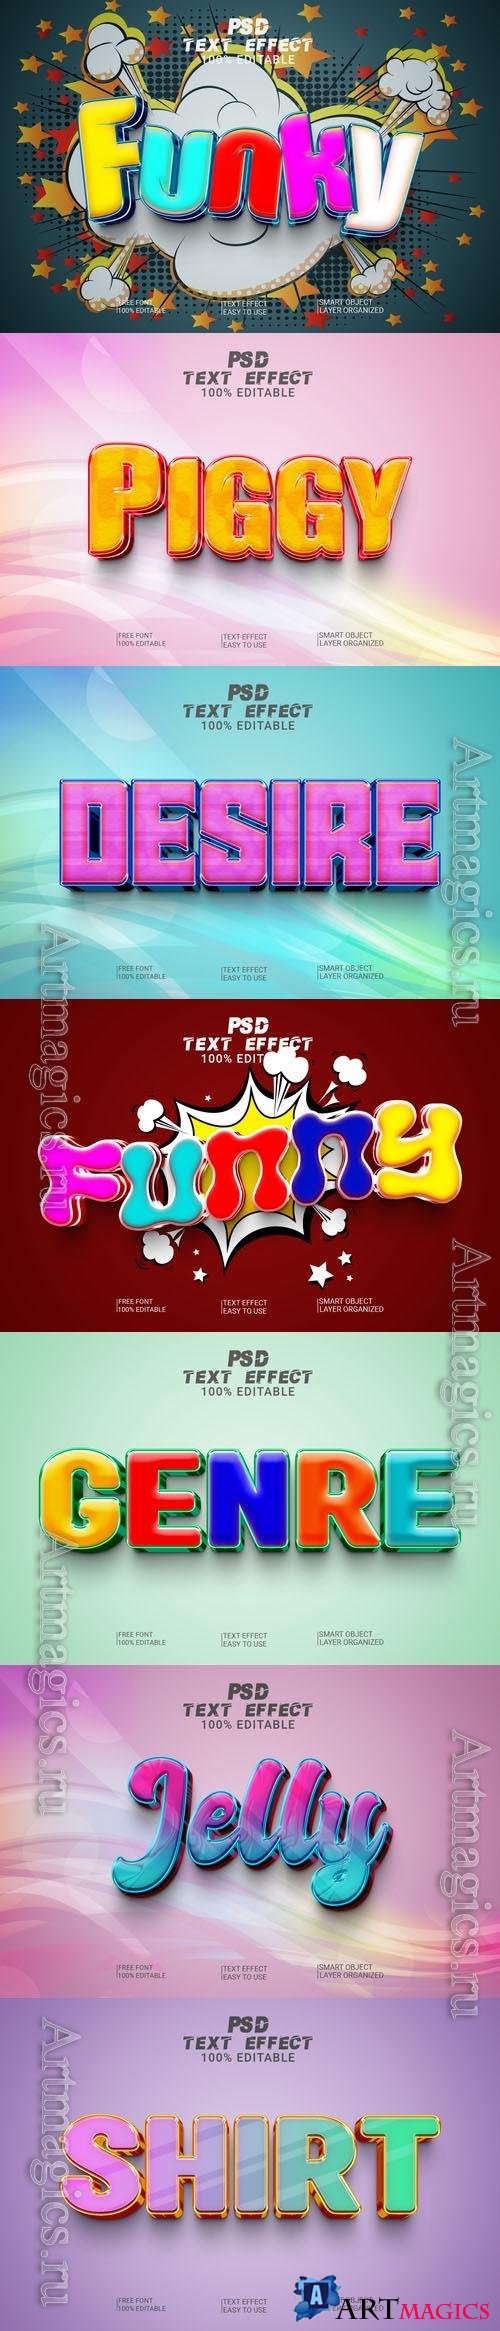 Psd style text effect editable set vol 437 